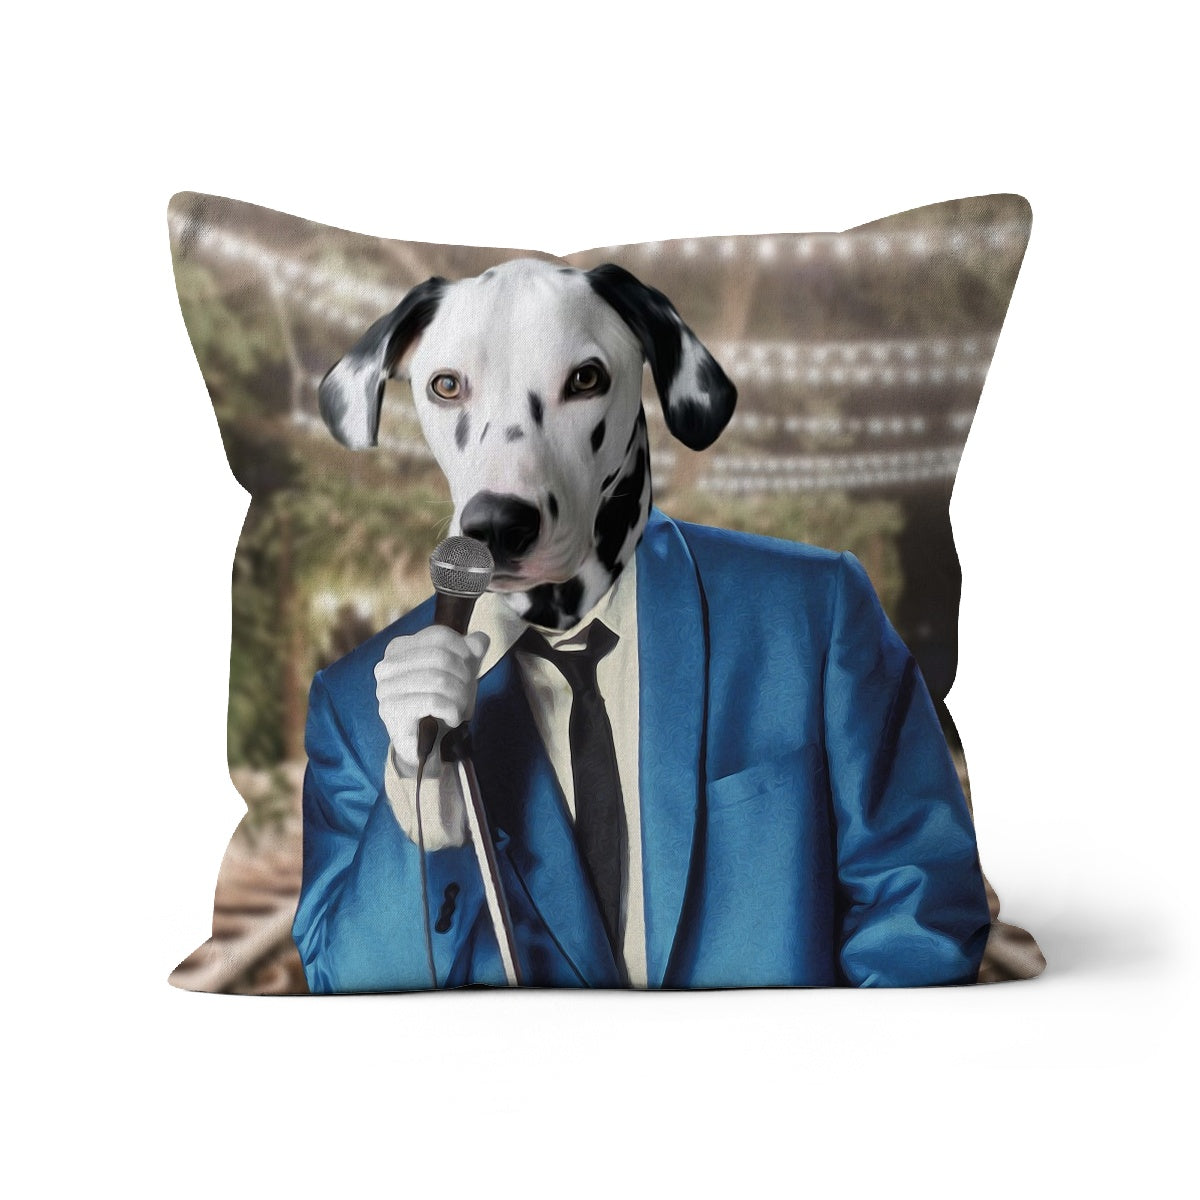 Paw & Glory, paw and glory, pillow custom, photo dog pillows, custom design pillows, custom pillow design, pillow personalized, dog pillow custom, Pet Portrait cushion,